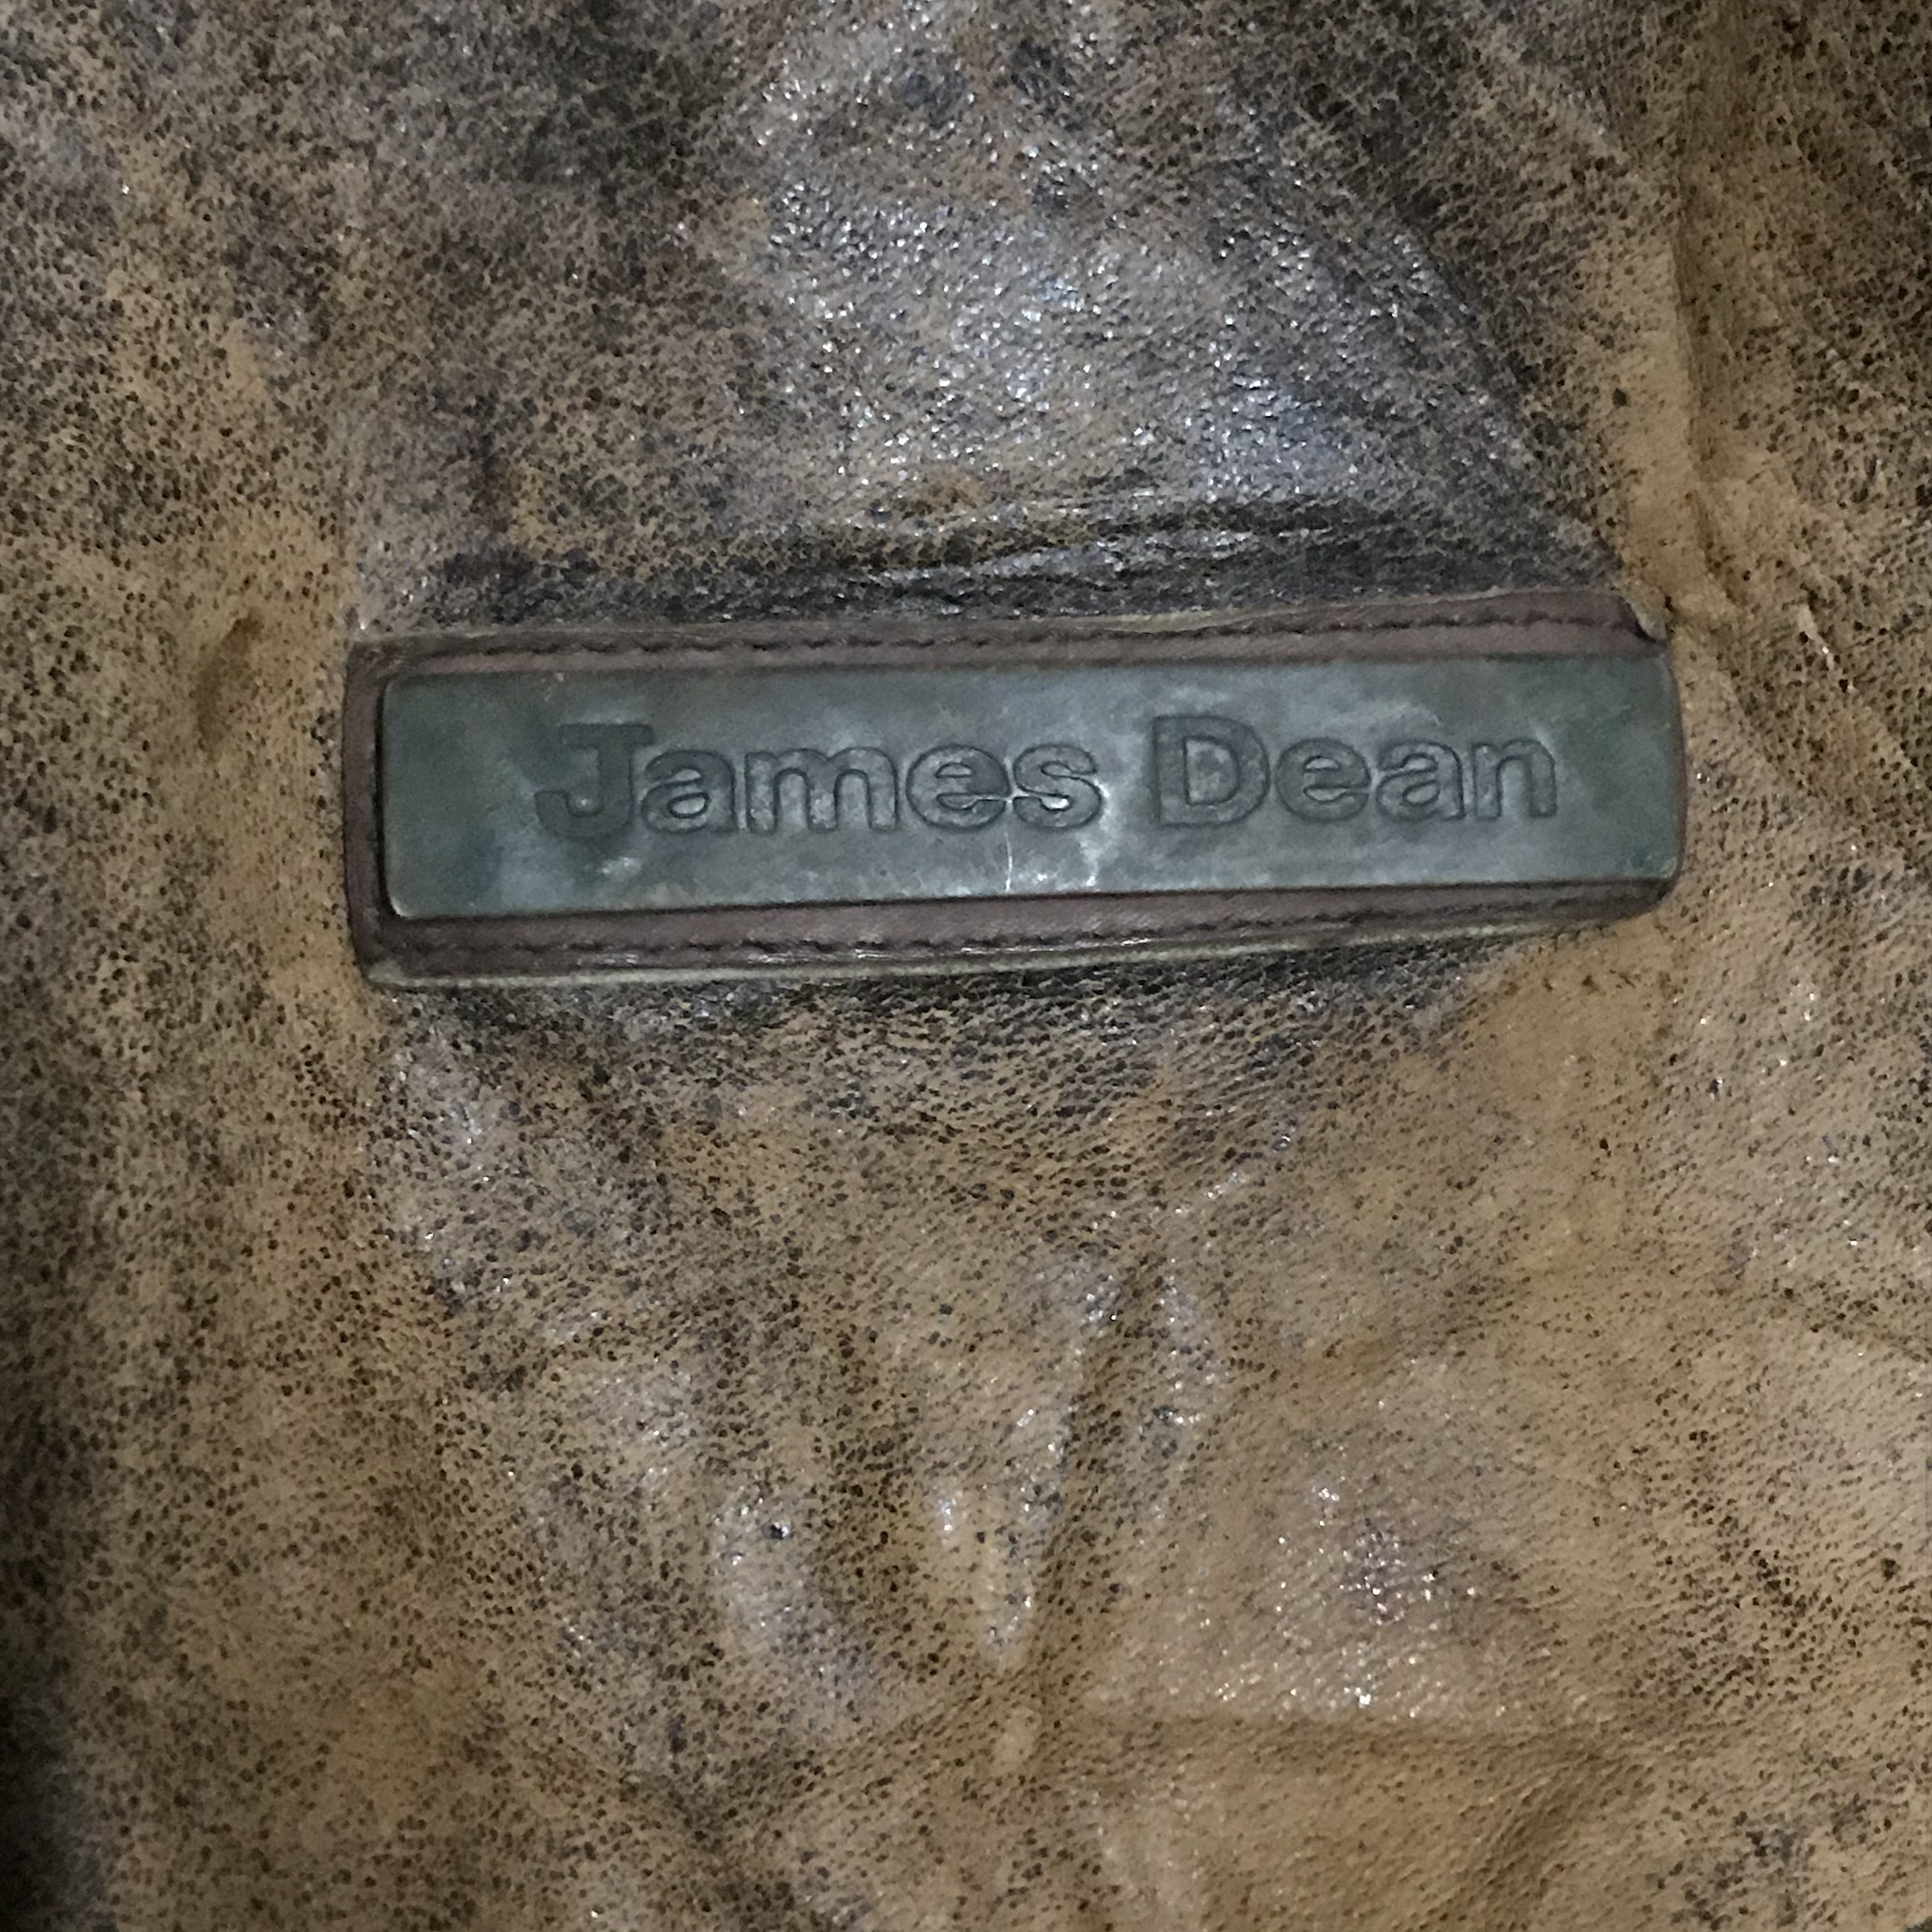 Genuine Leather - James Dean Sheepskin Leather Jackets - 2